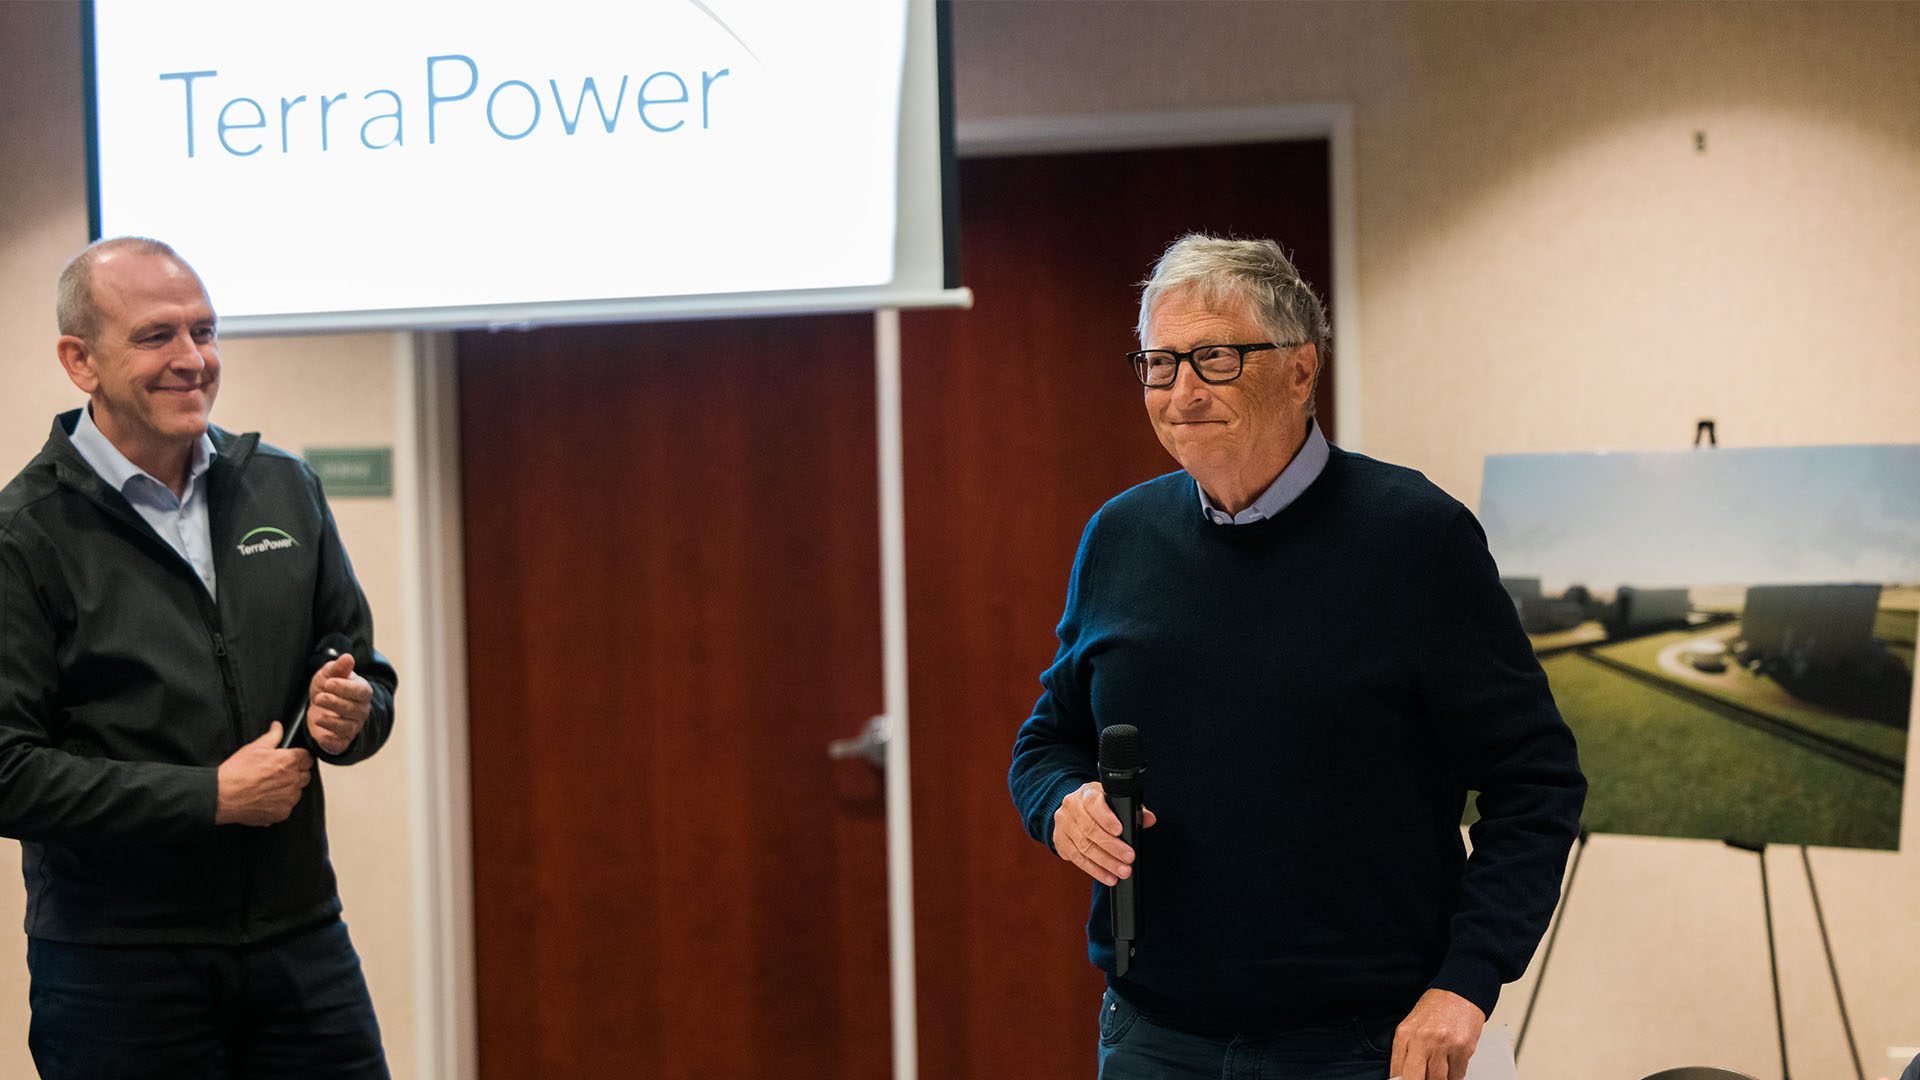 TerraPower founder Bill Gates in Wyoming